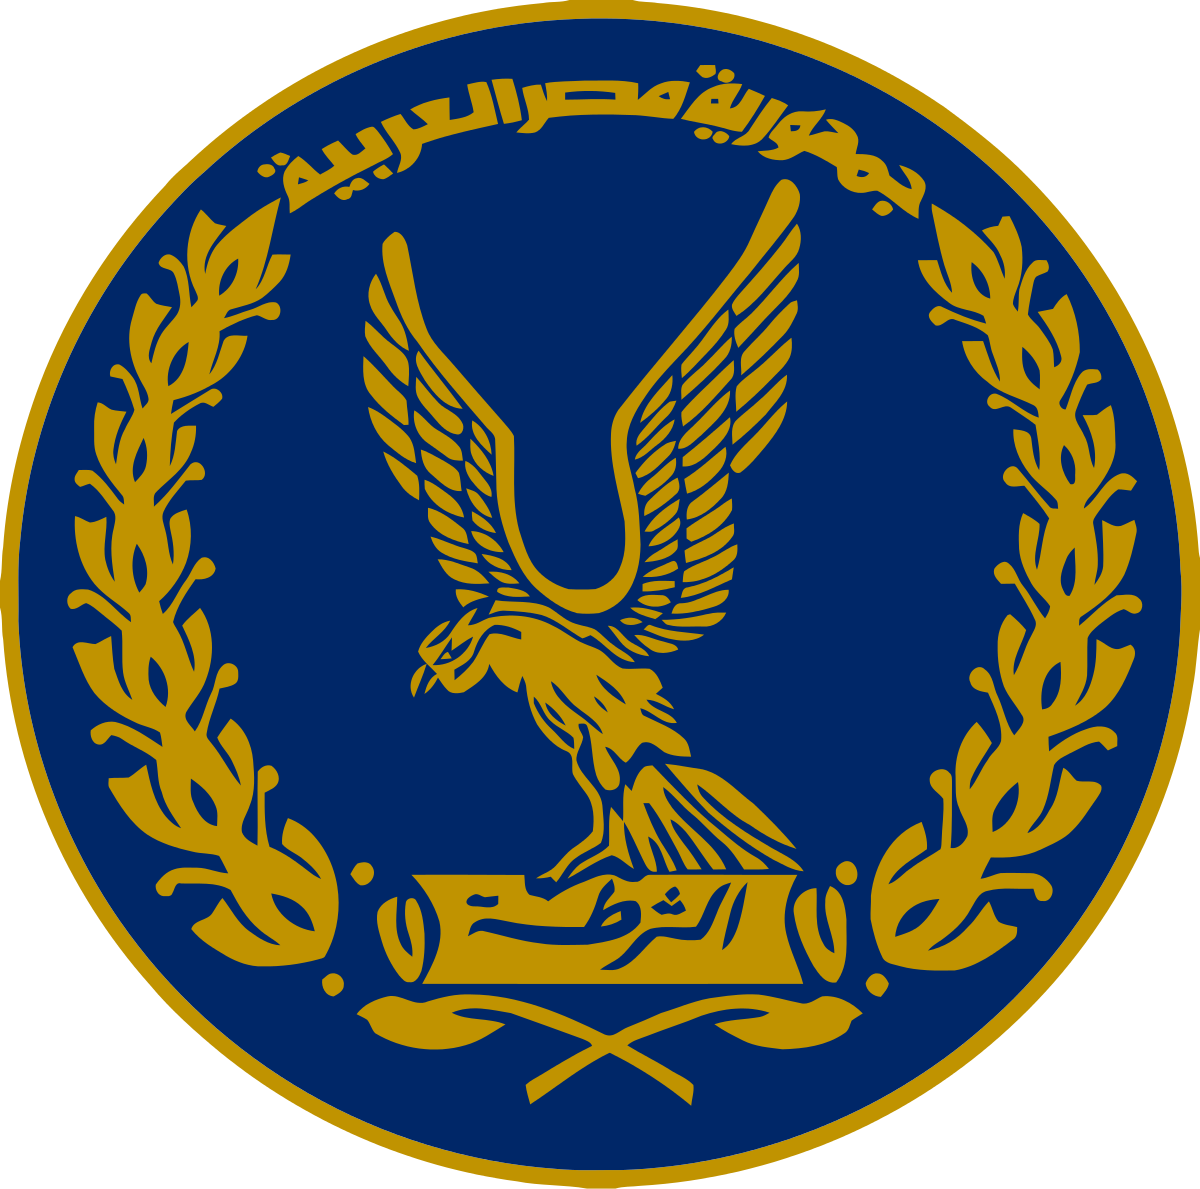 Egyptian police